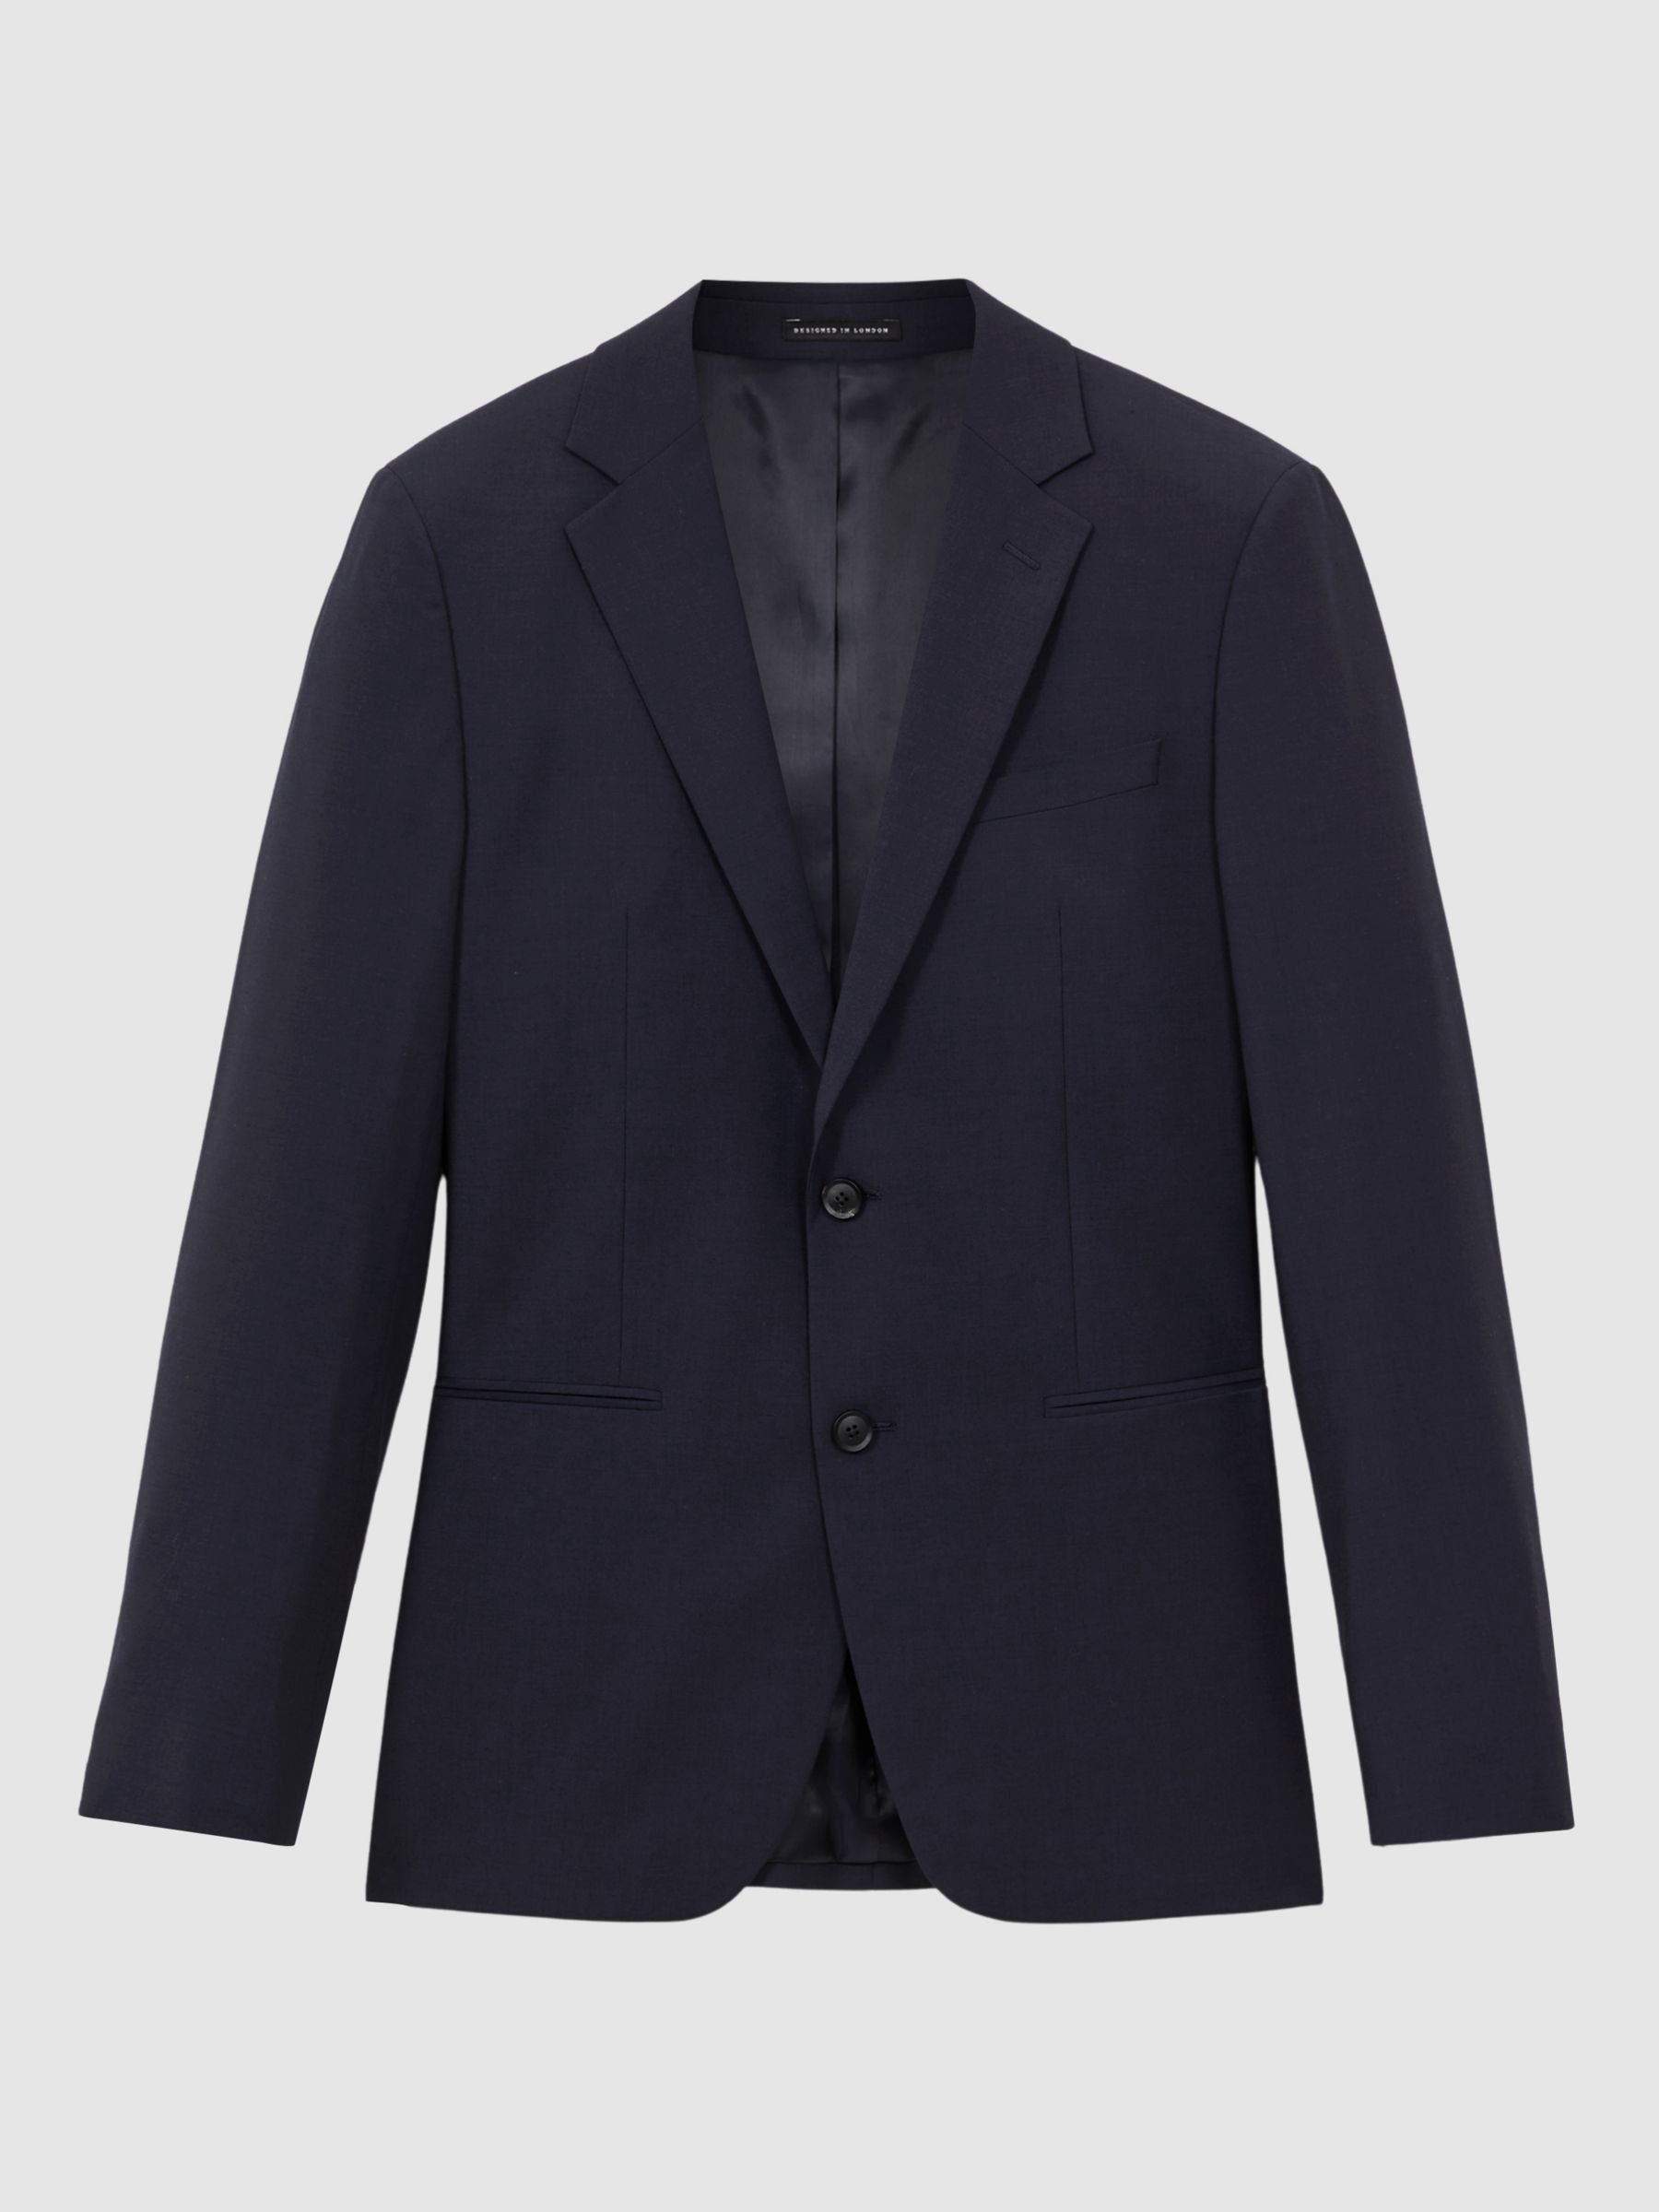 Buy Reiss Hope Wool Blend Tailored Fit Suit Jacket, Navy Online at johnlewis.com